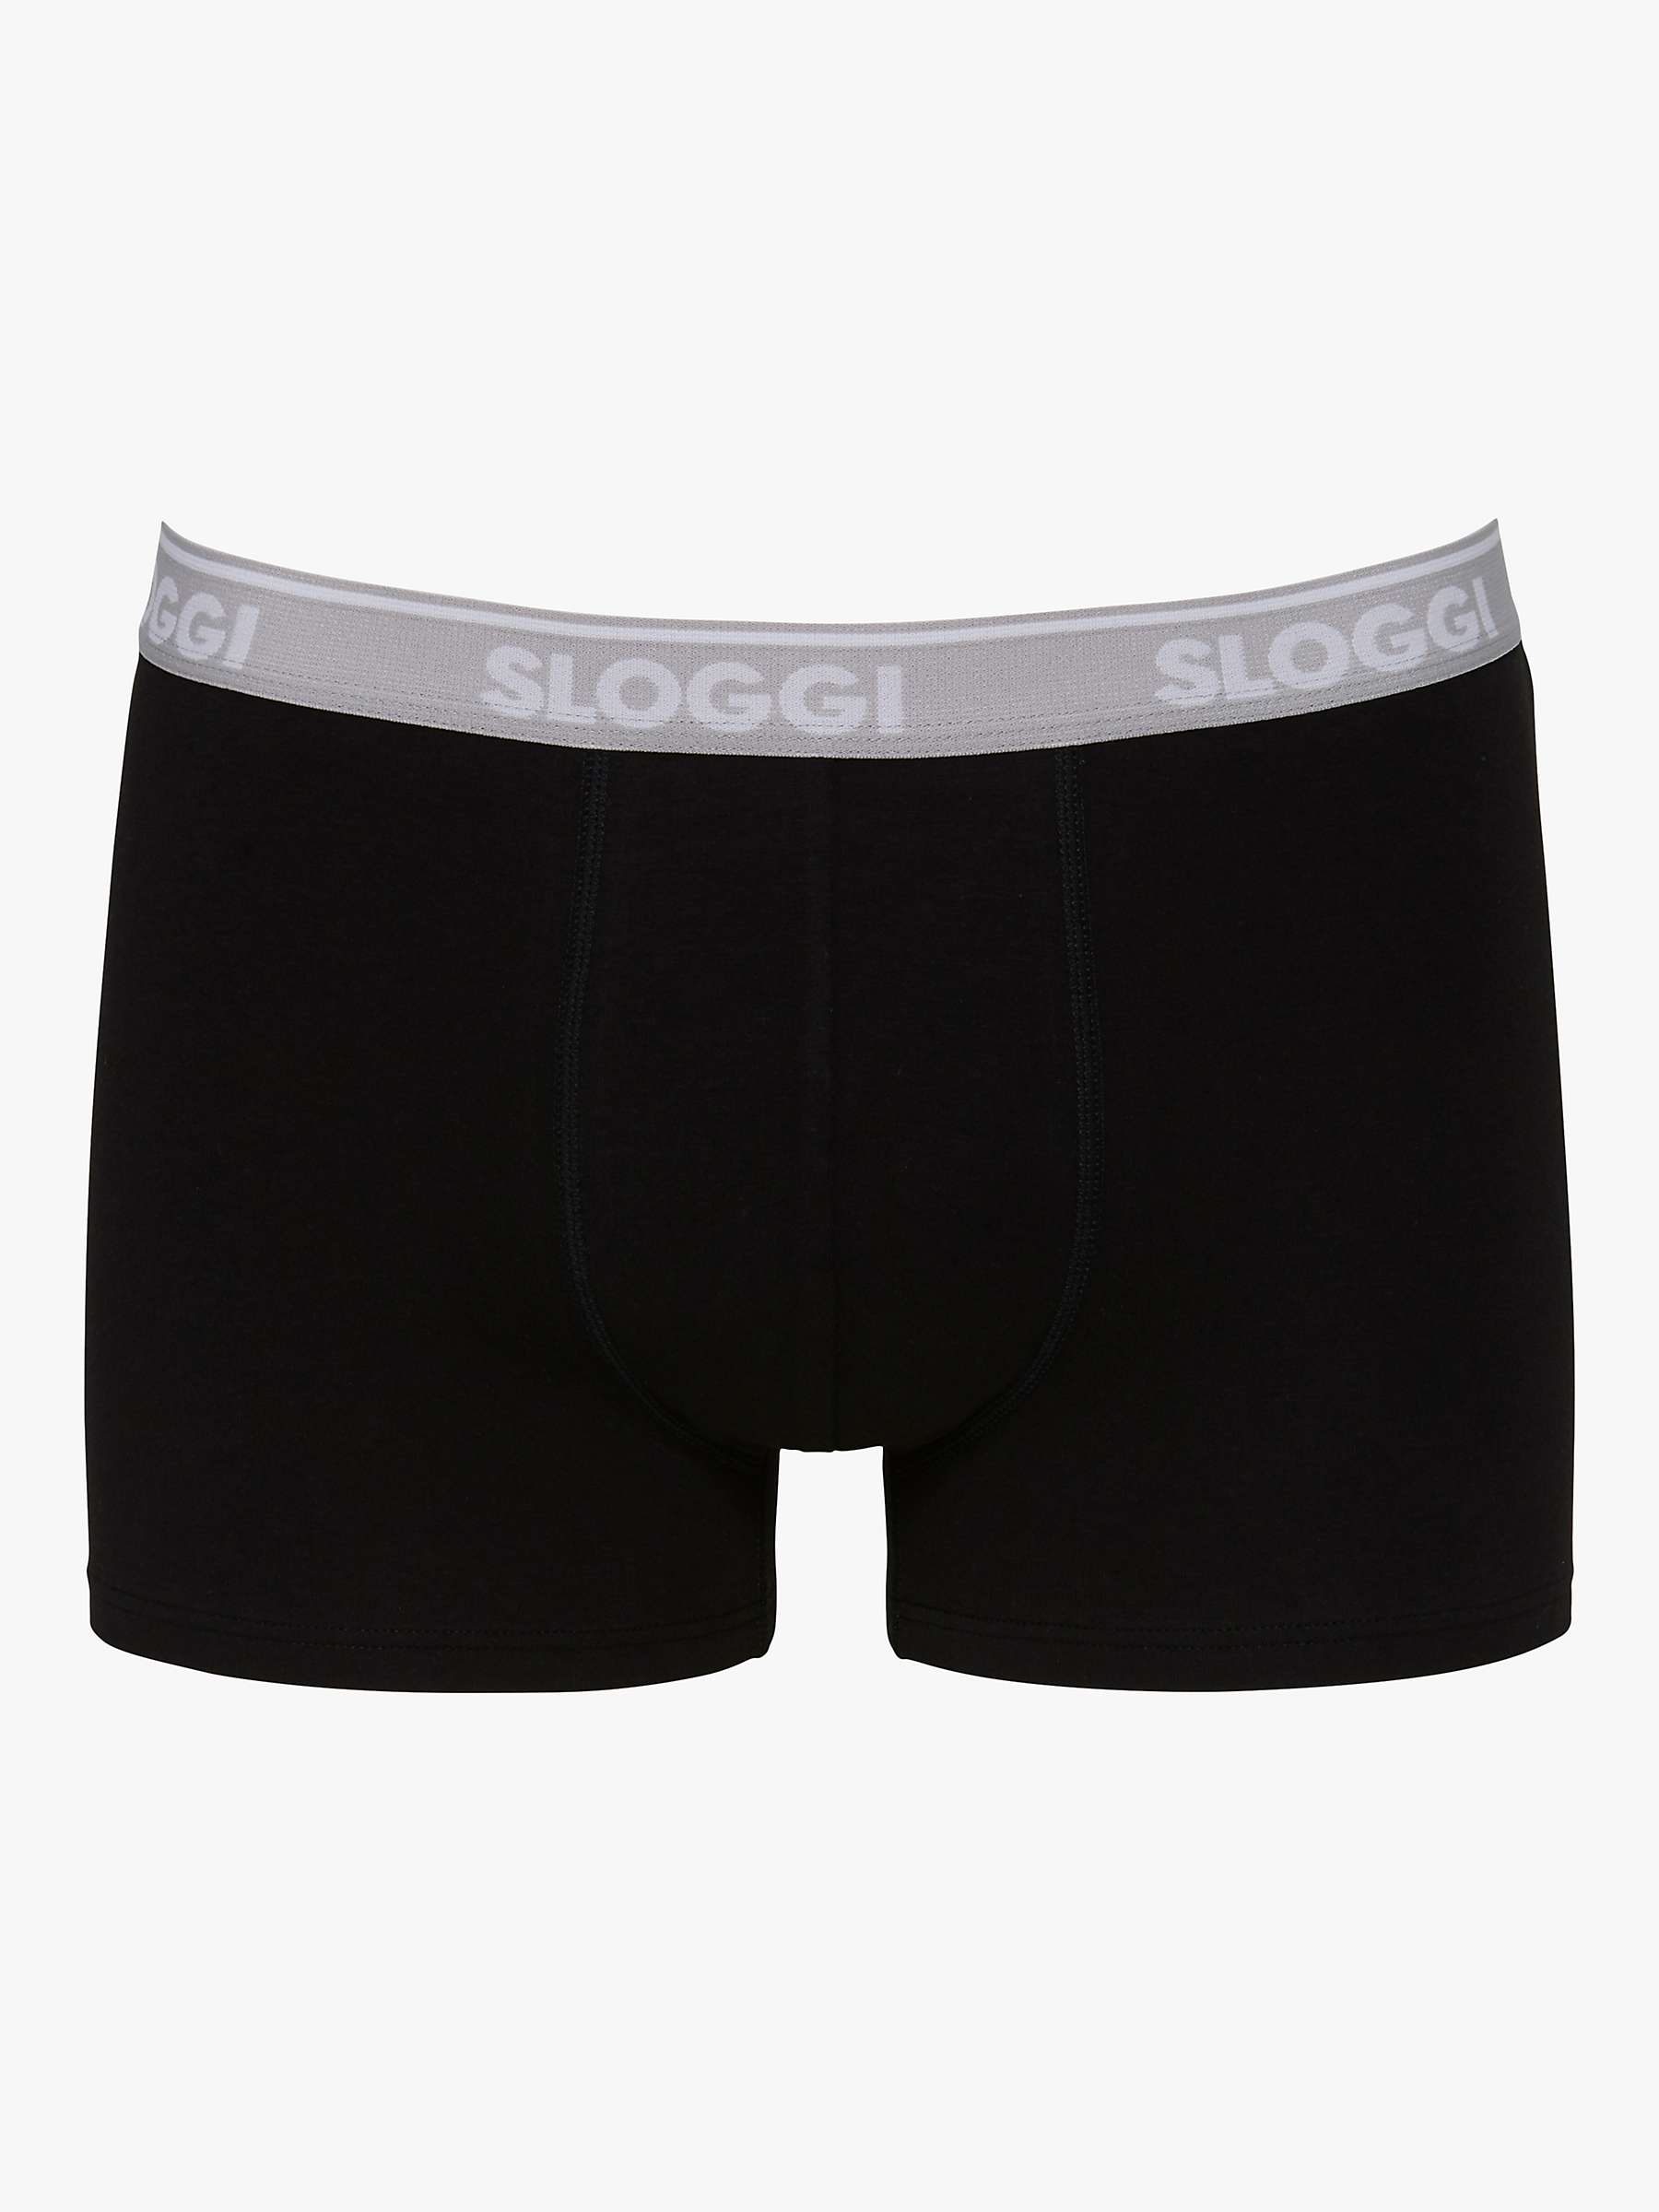 Buy sloggi Classic Short Briefs, Pack of 2, Black Online at johnlewis.com